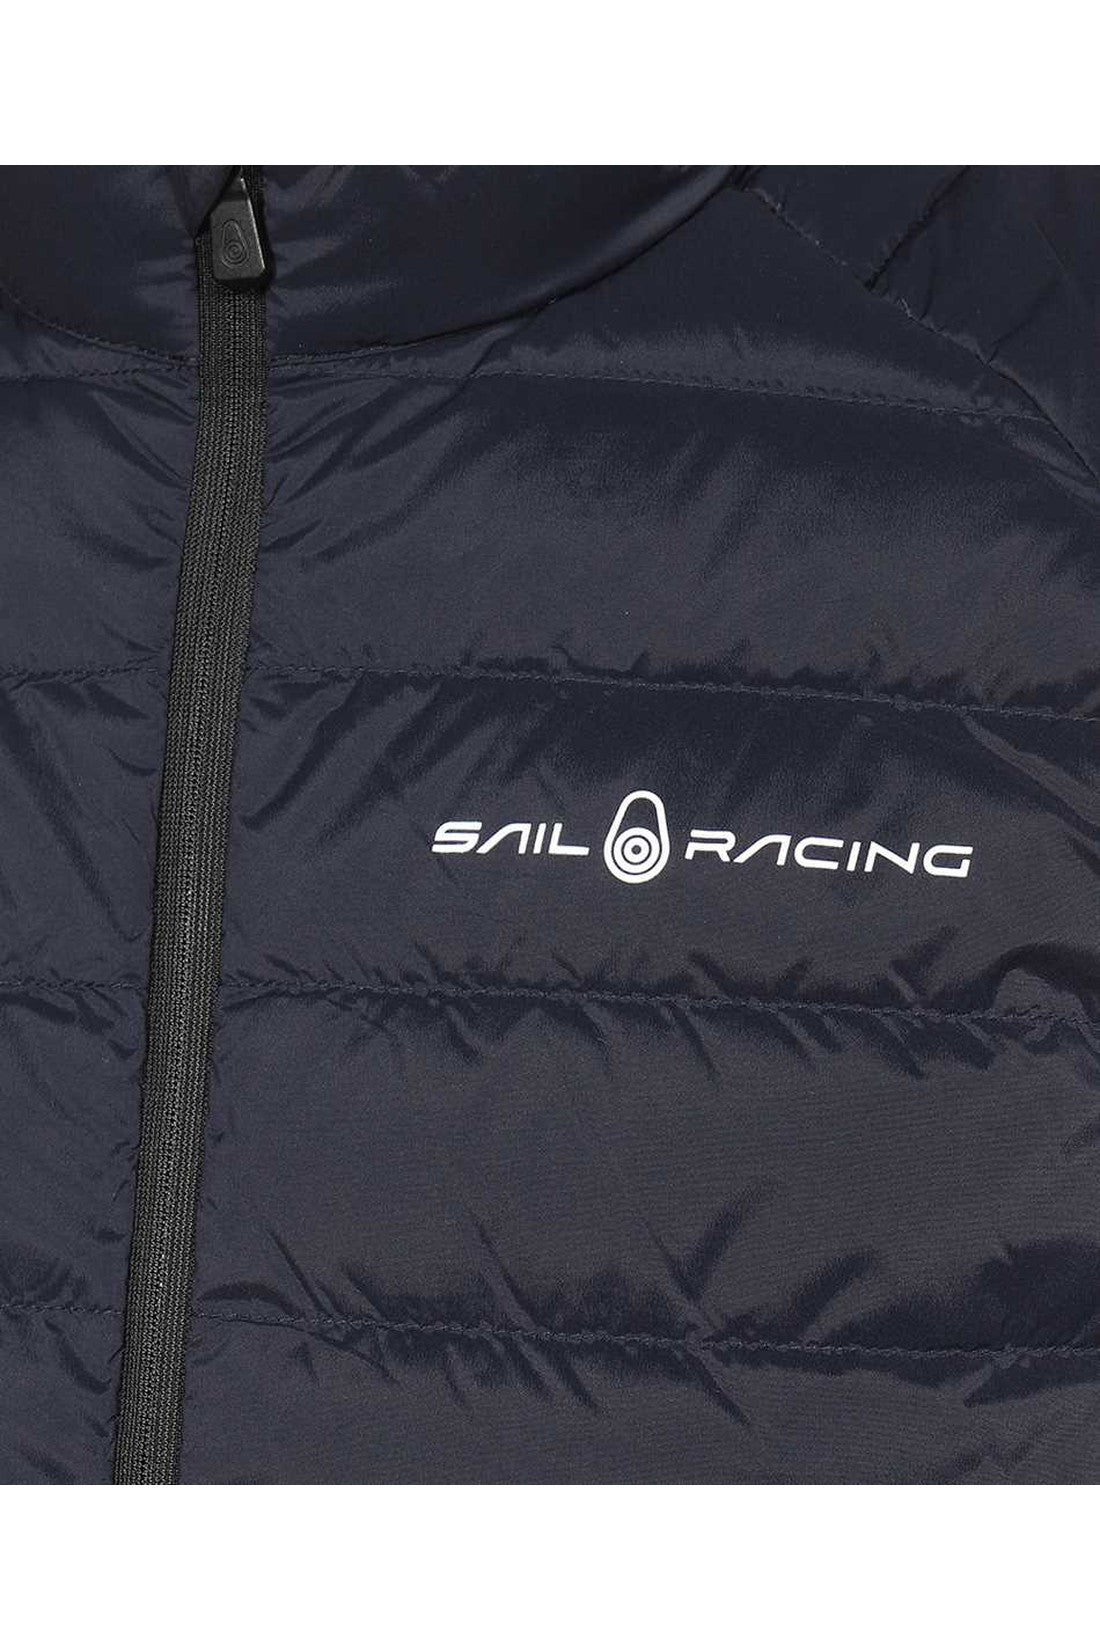 Bodywarmer jacket-Sail Racing-OUTLET-SALE-ARCHIVIST